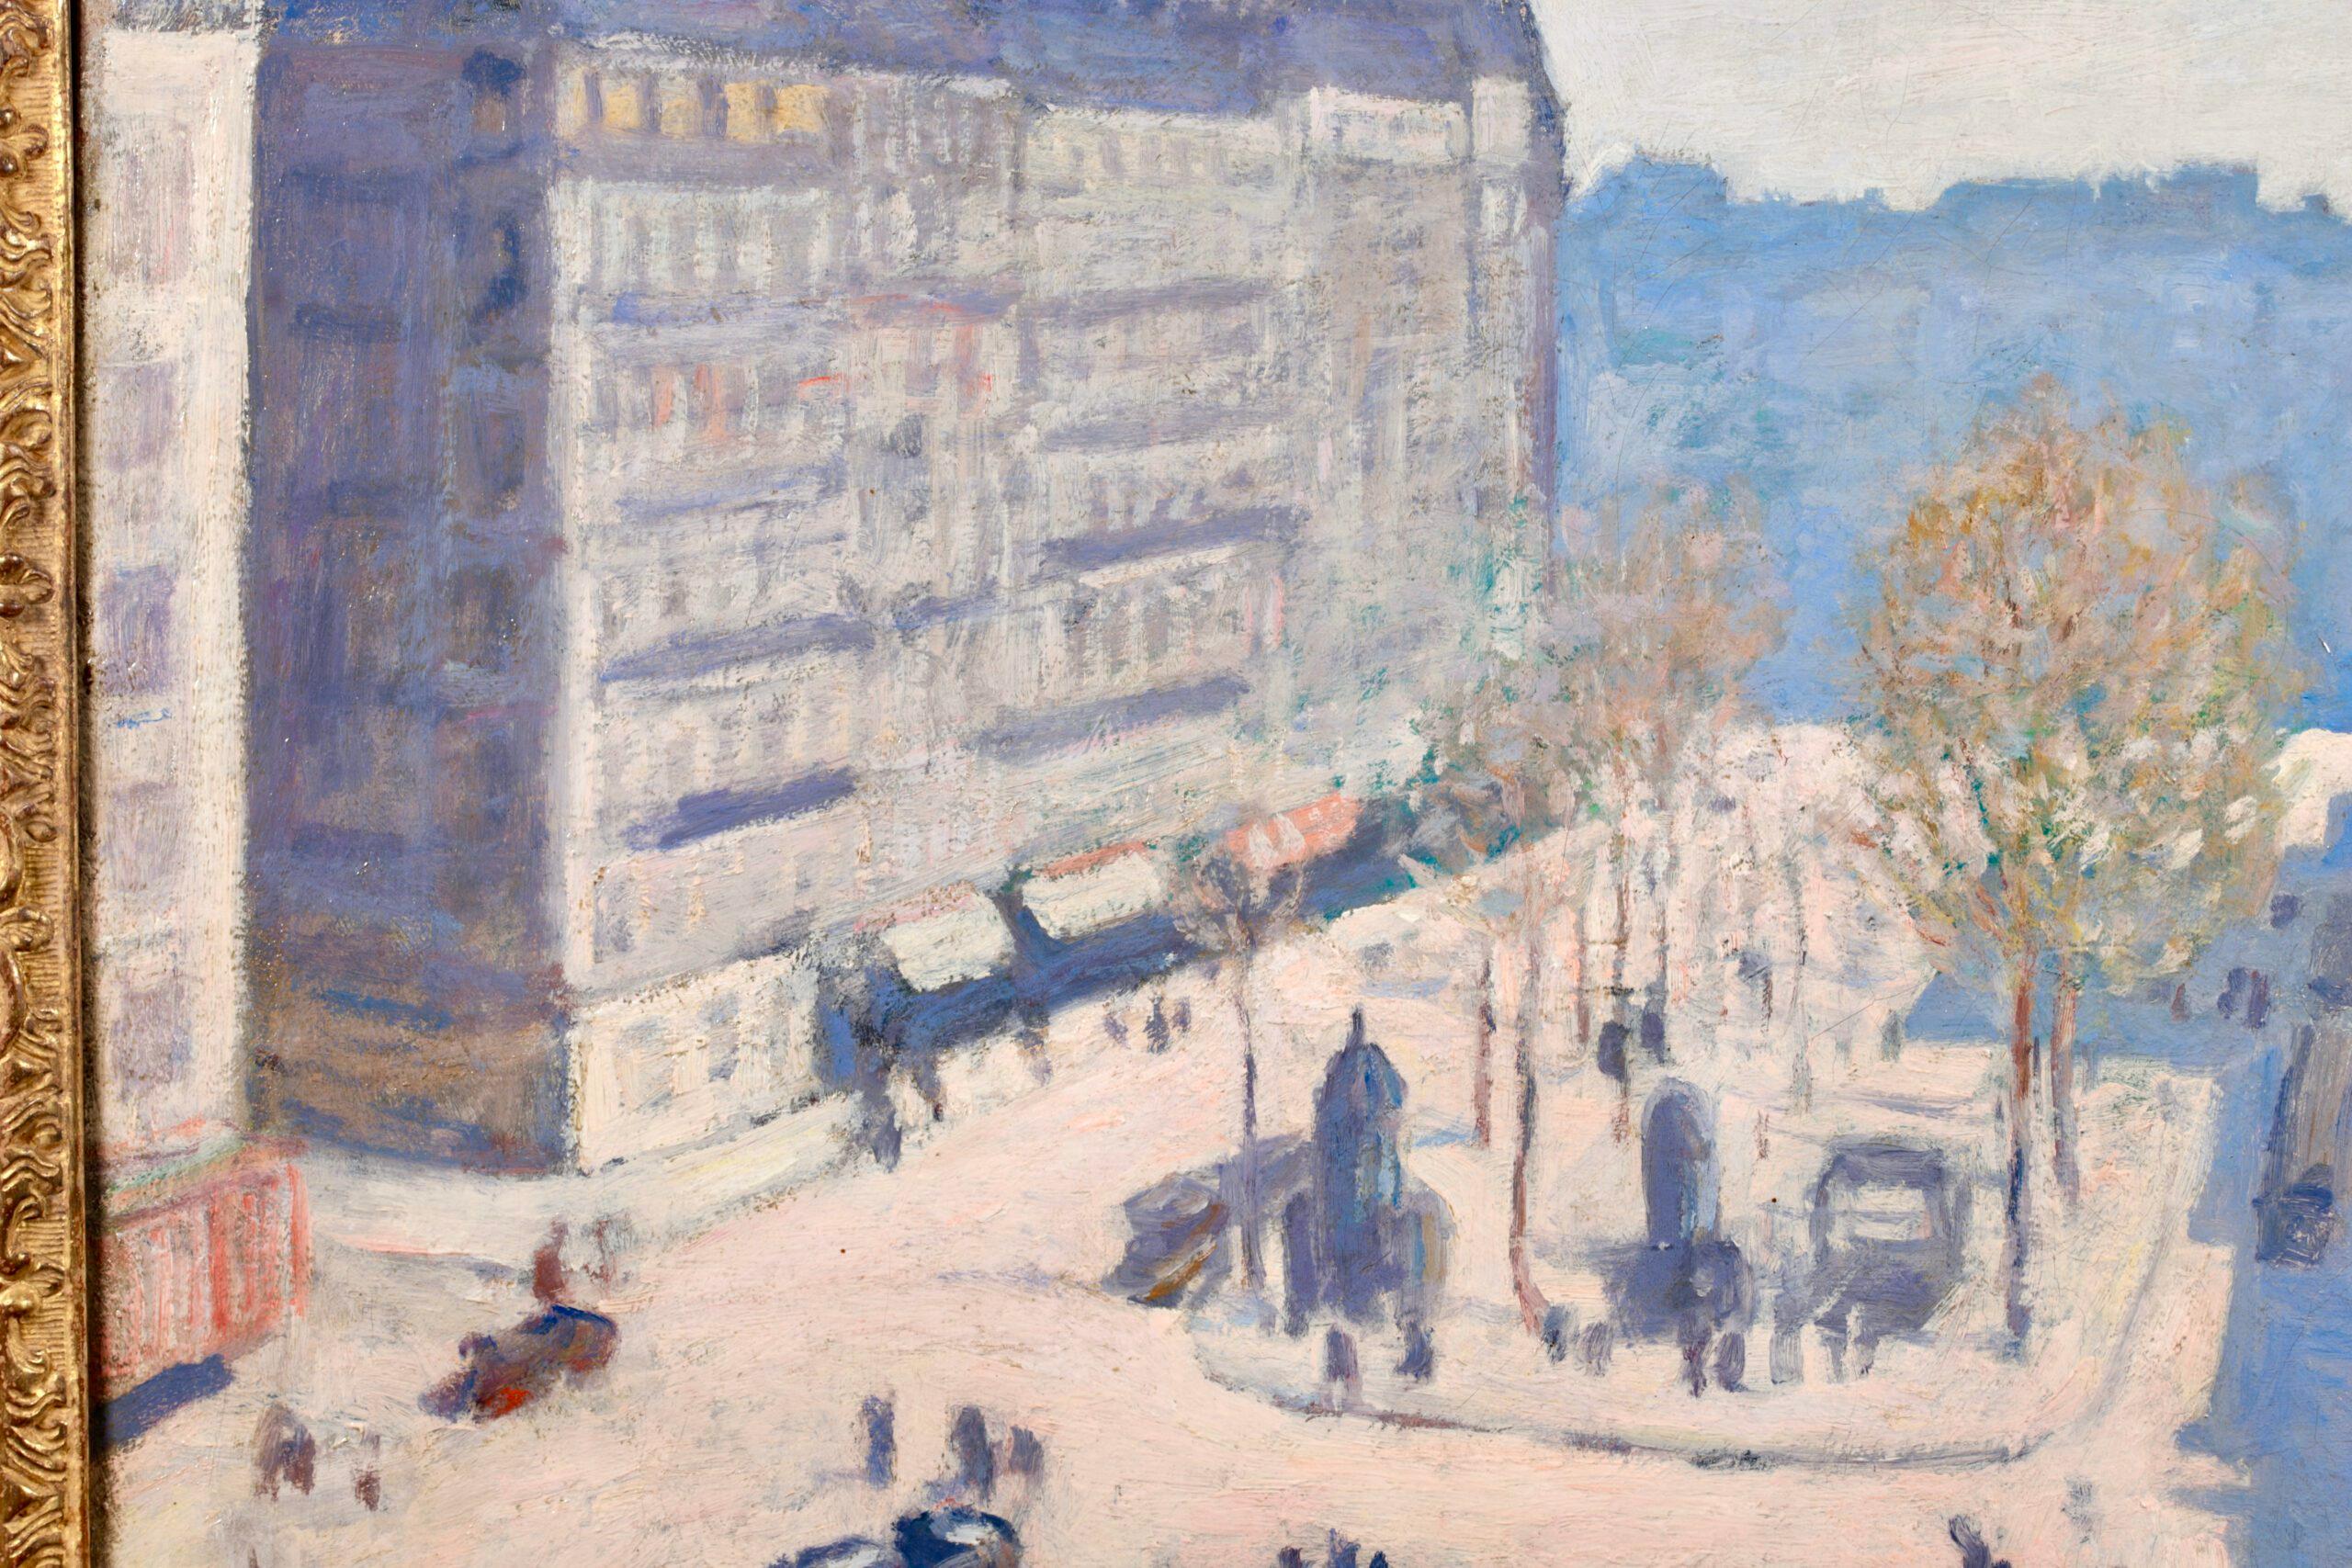 Boulevard De Clichy - Post Impressionist City Landscape Painting by Albert Andre For Sale 5